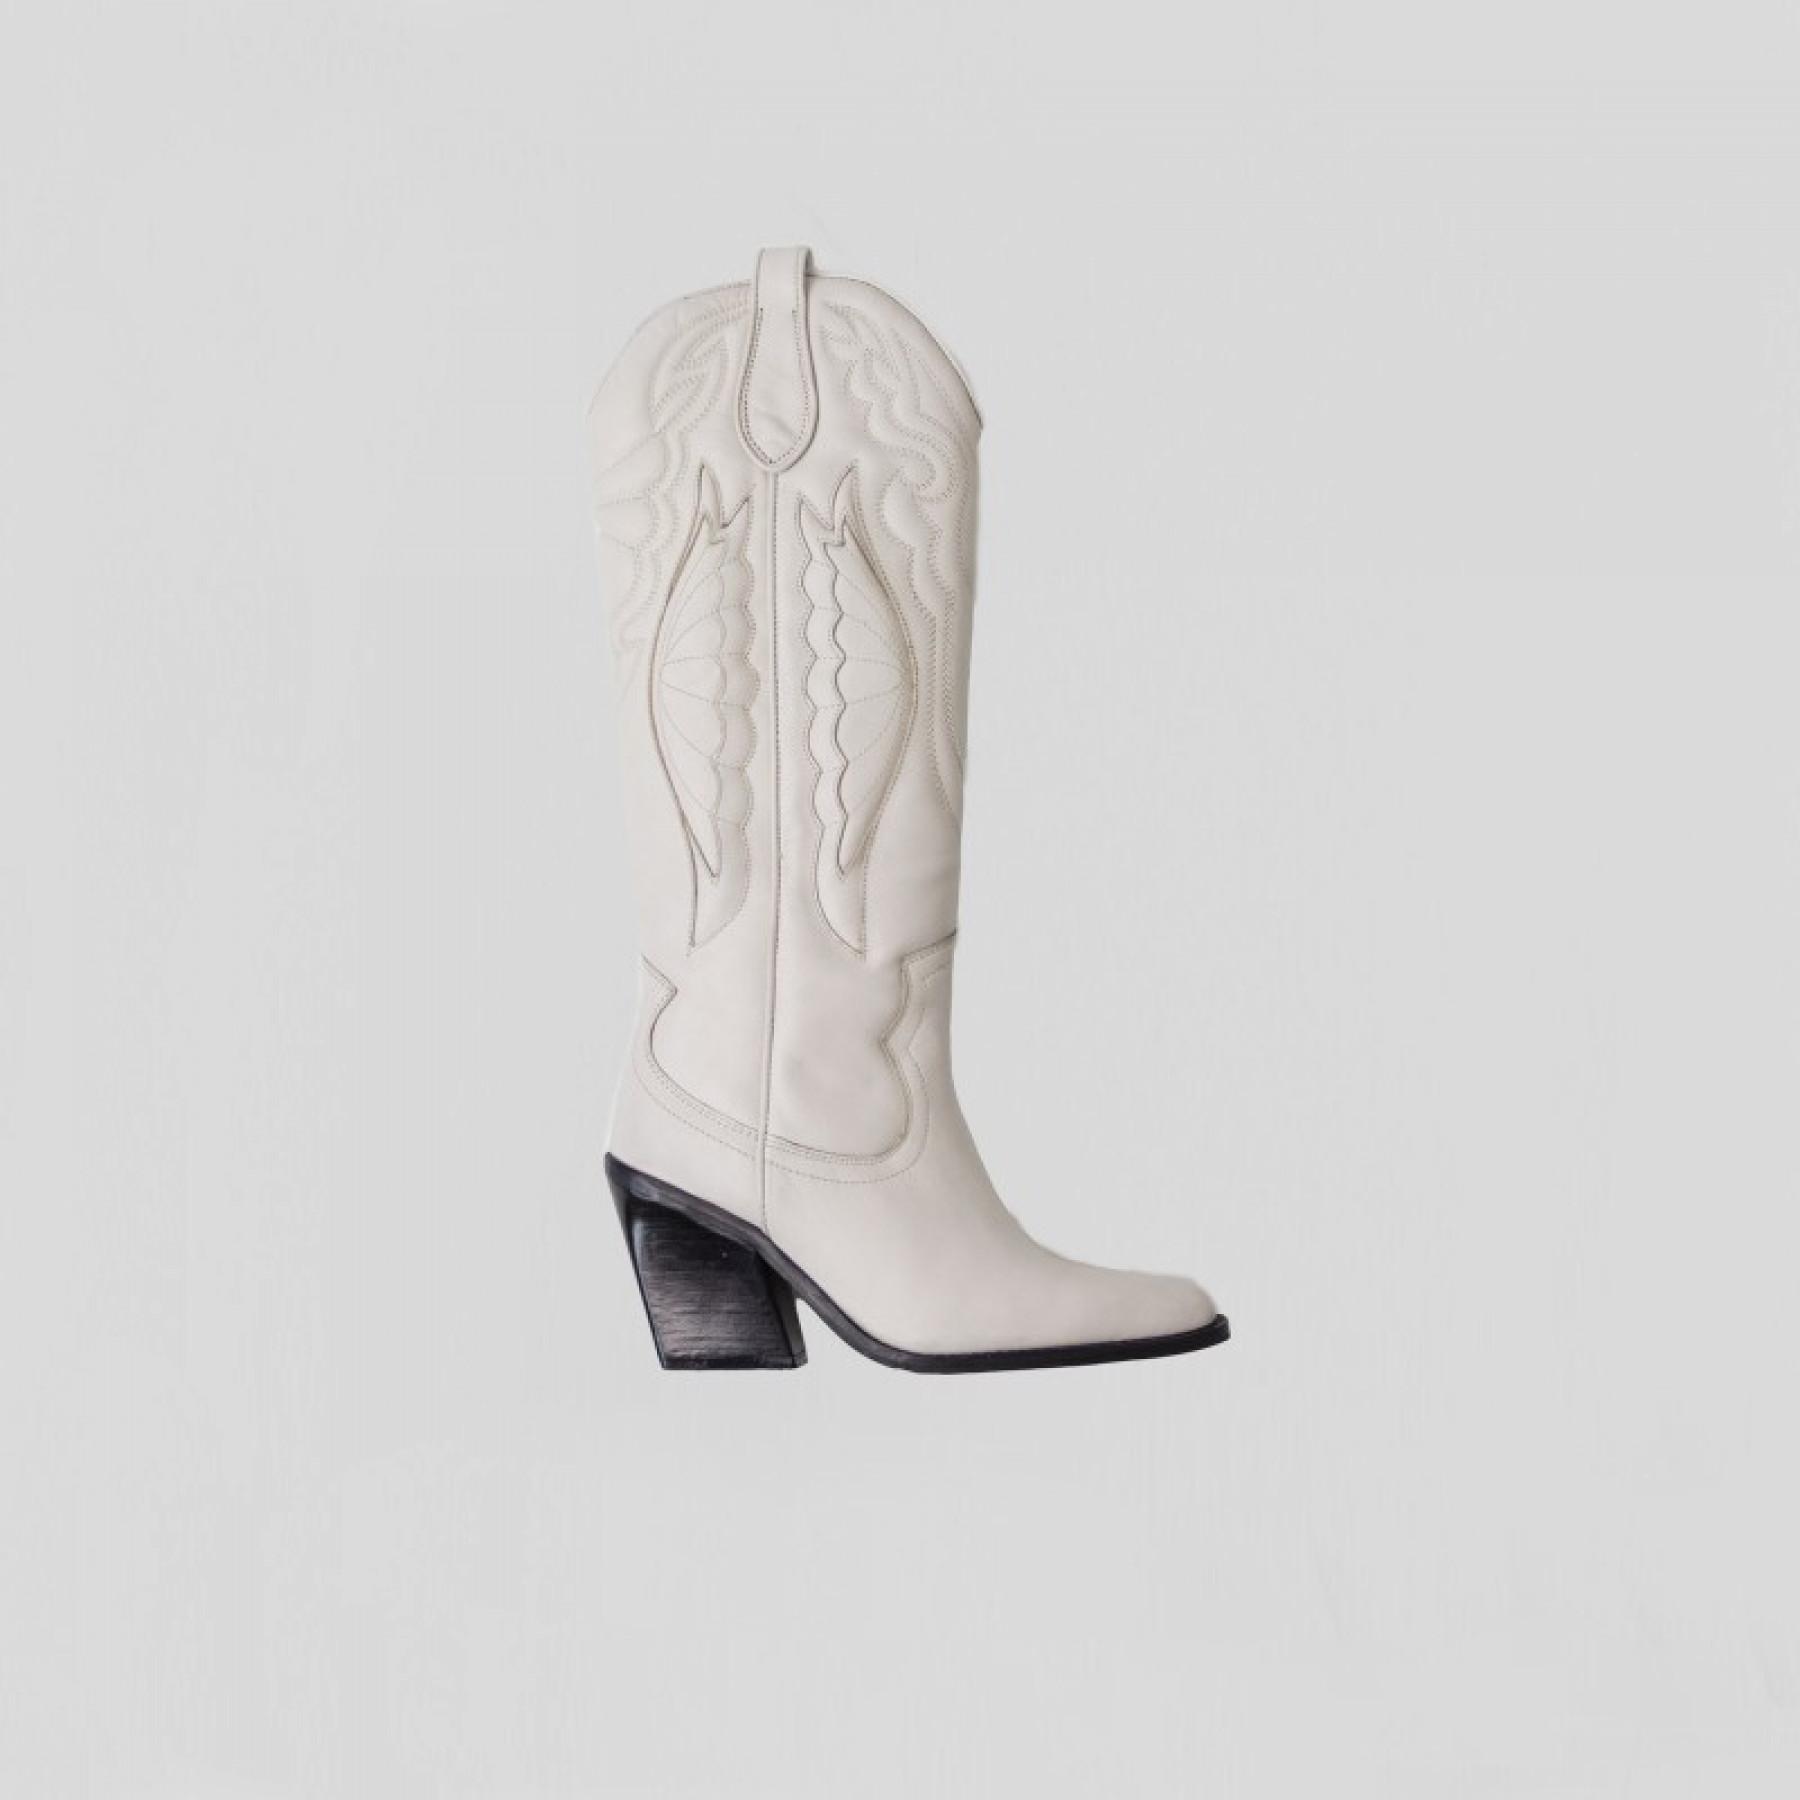 Leather boots woman Bronx New-Kole Western